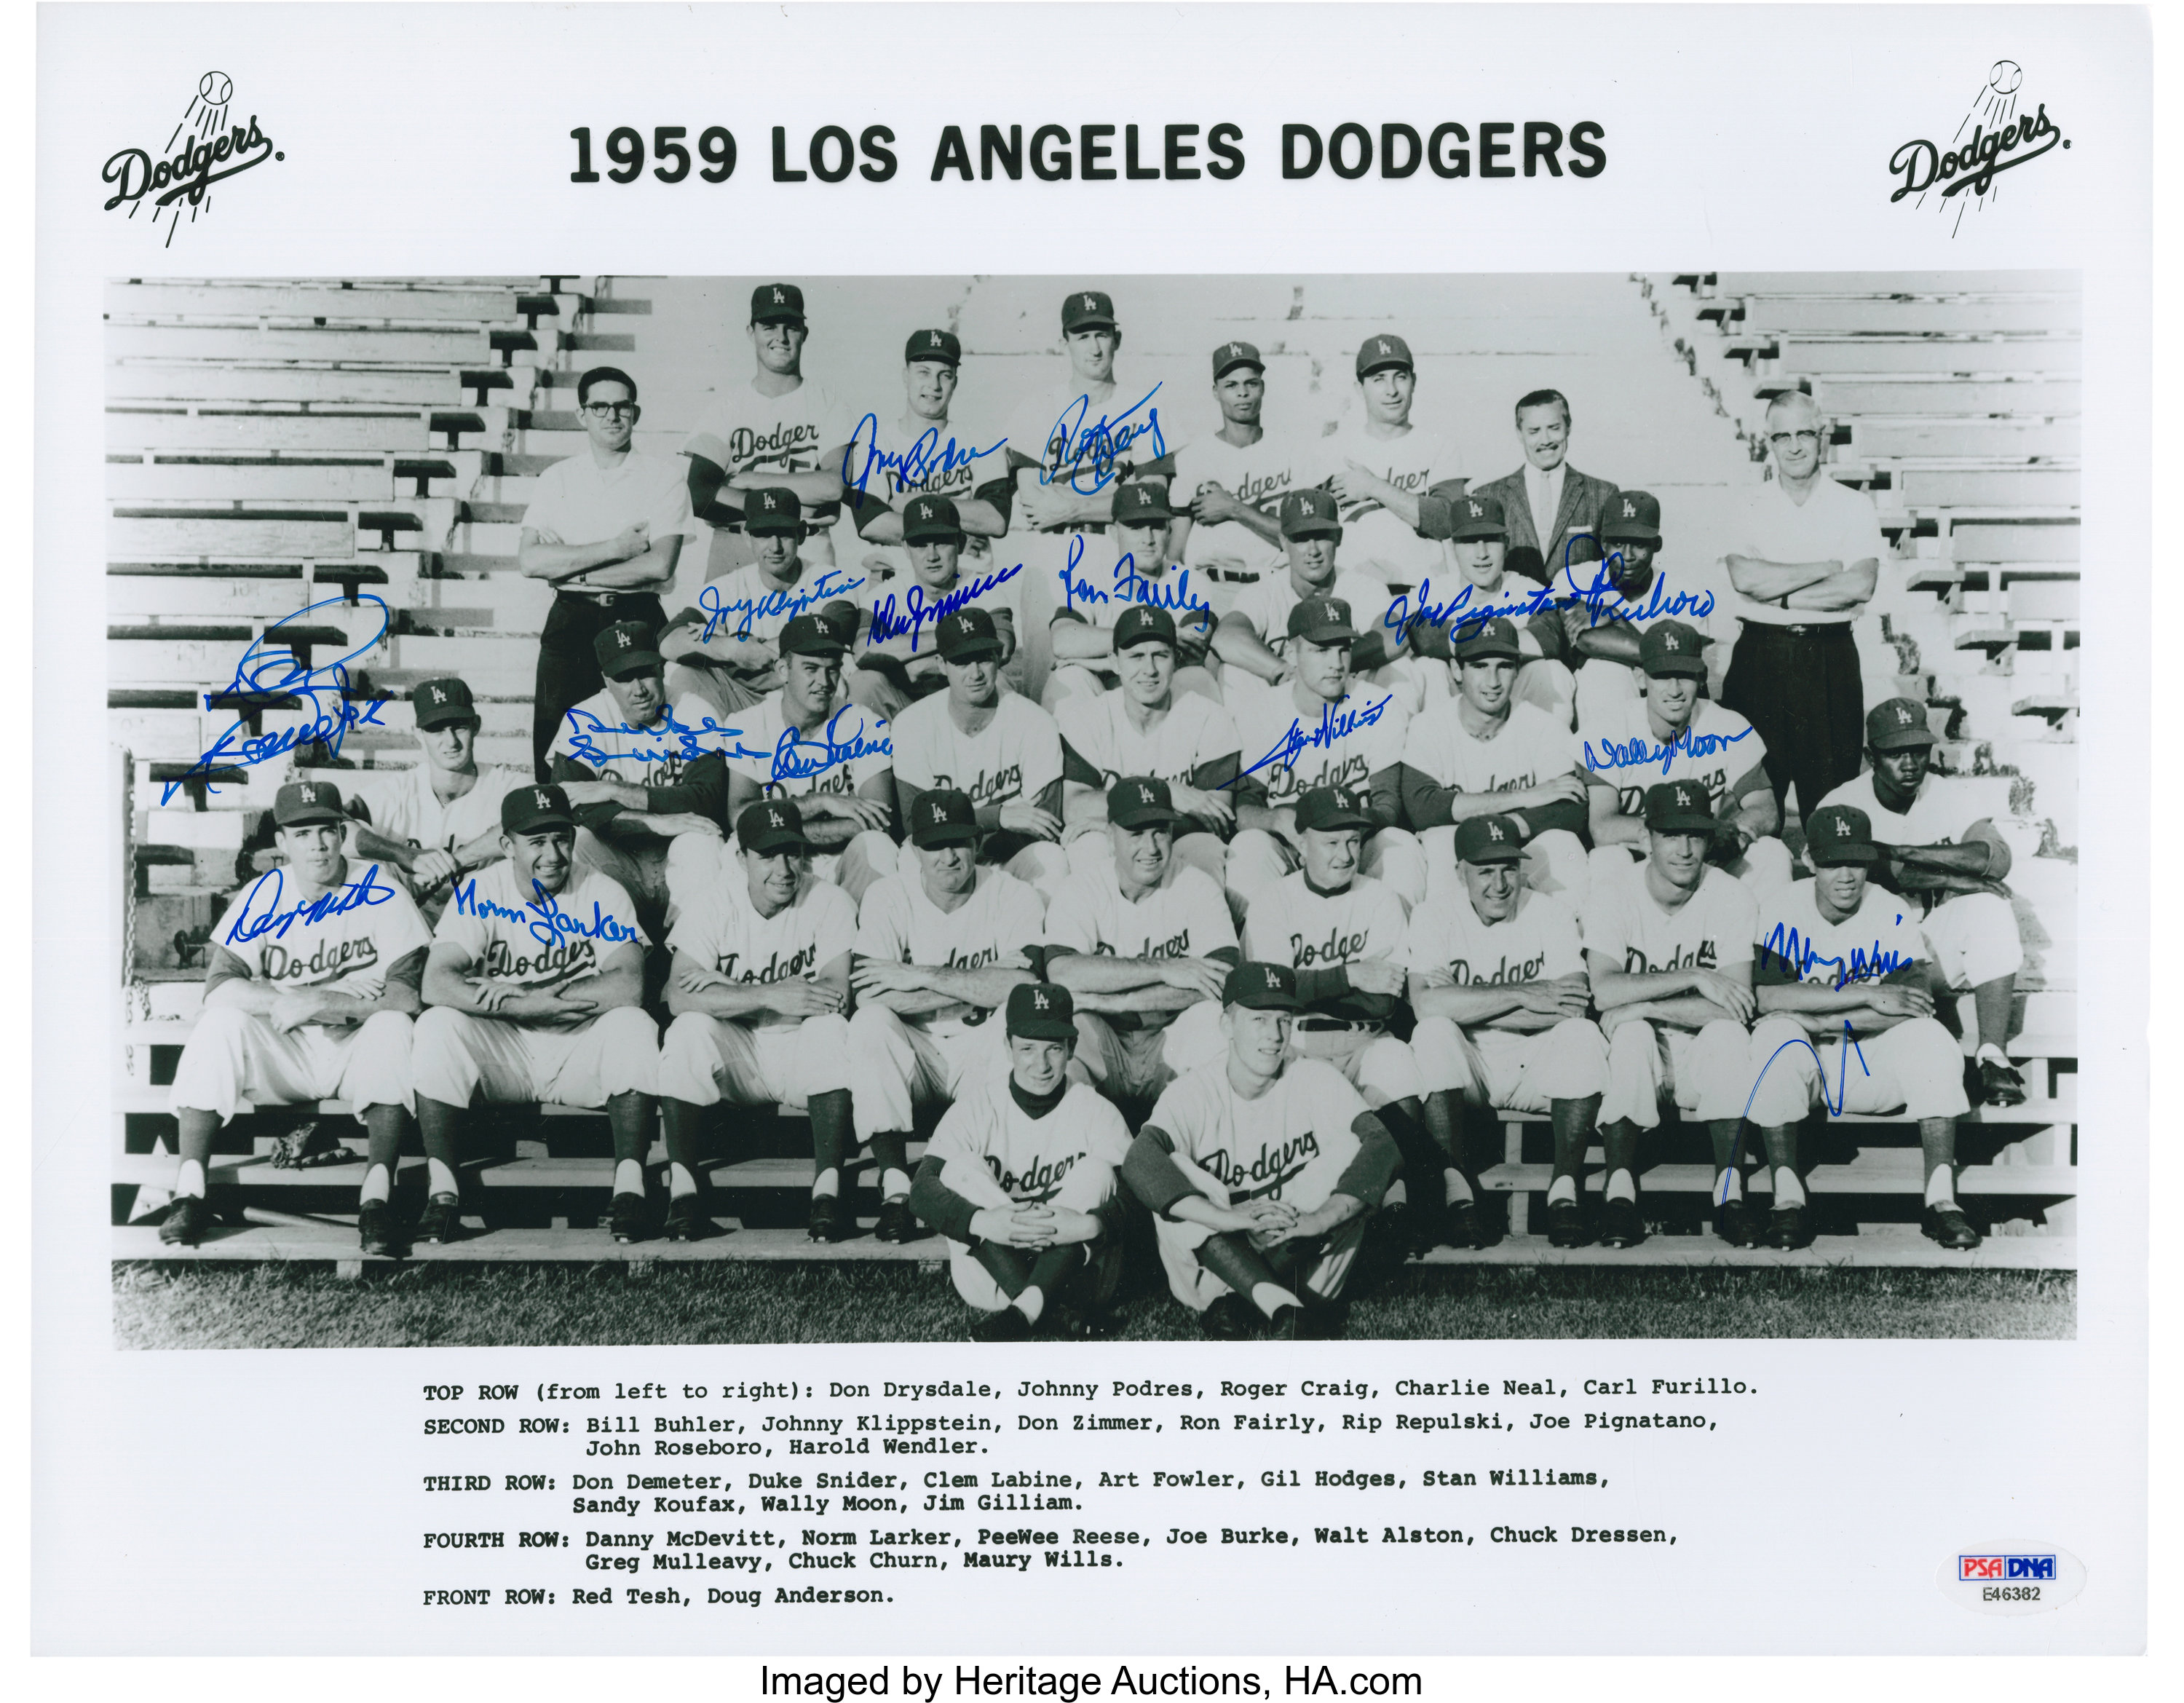 1955 Brooklyn Dodgers Clem Labine/Johnny Podres/Roger Craig Signed 16x20  JSA Authenticated